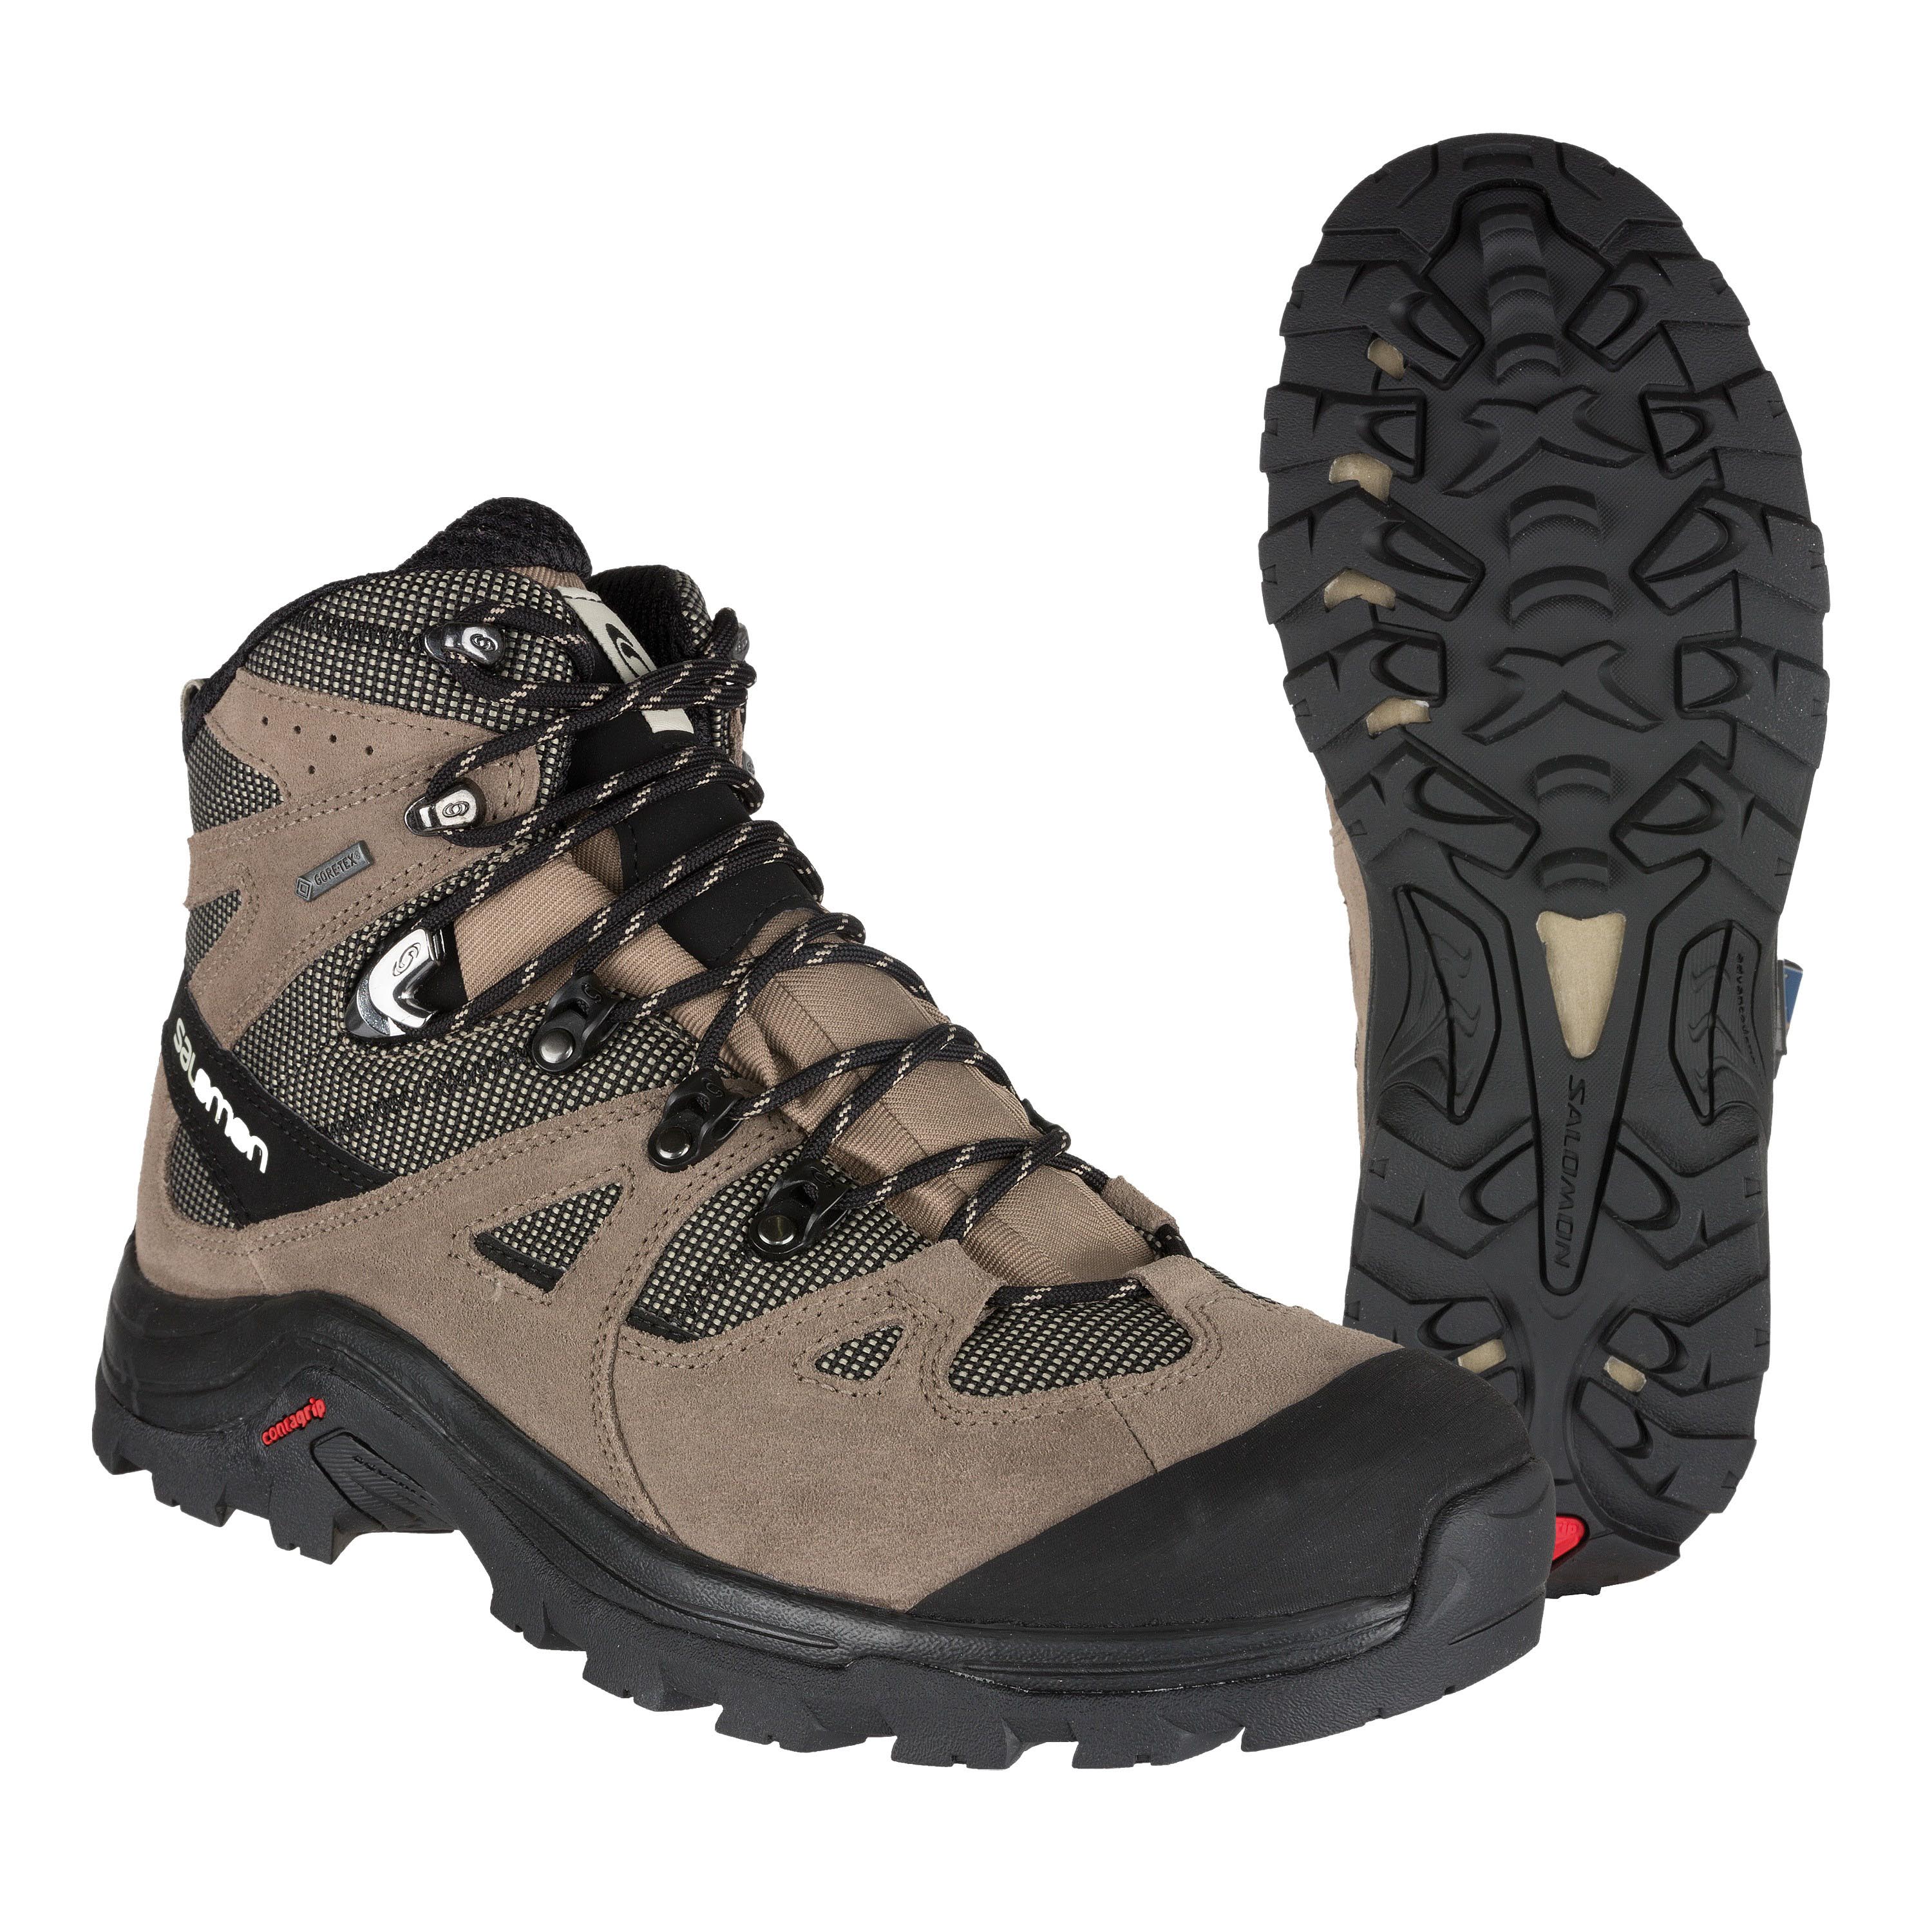 Discovery GTX brown | Salomon GTX brown | Hiking | | Footwear | Clothing